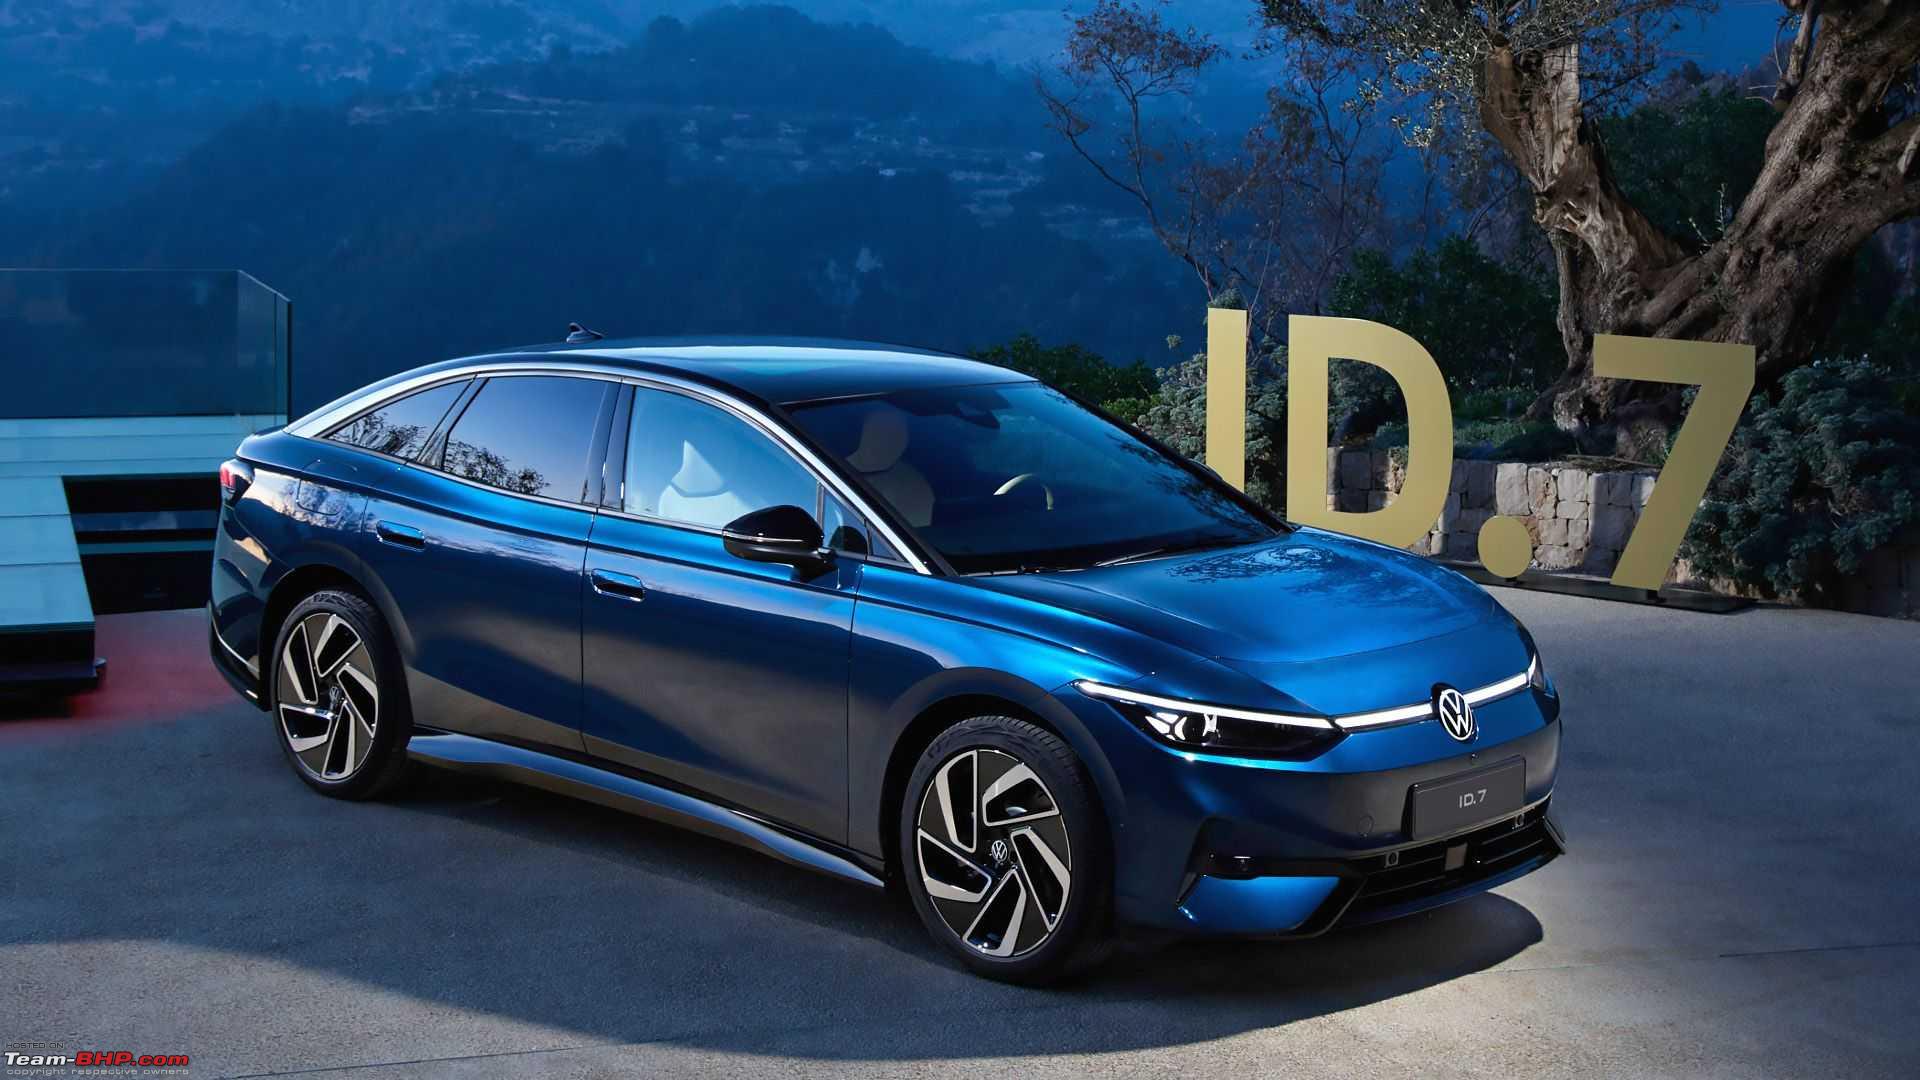 Production-ready Volkswagen ID.7 electric sedan spied ahead of global debut  in Q2 2023 - Team-BHP